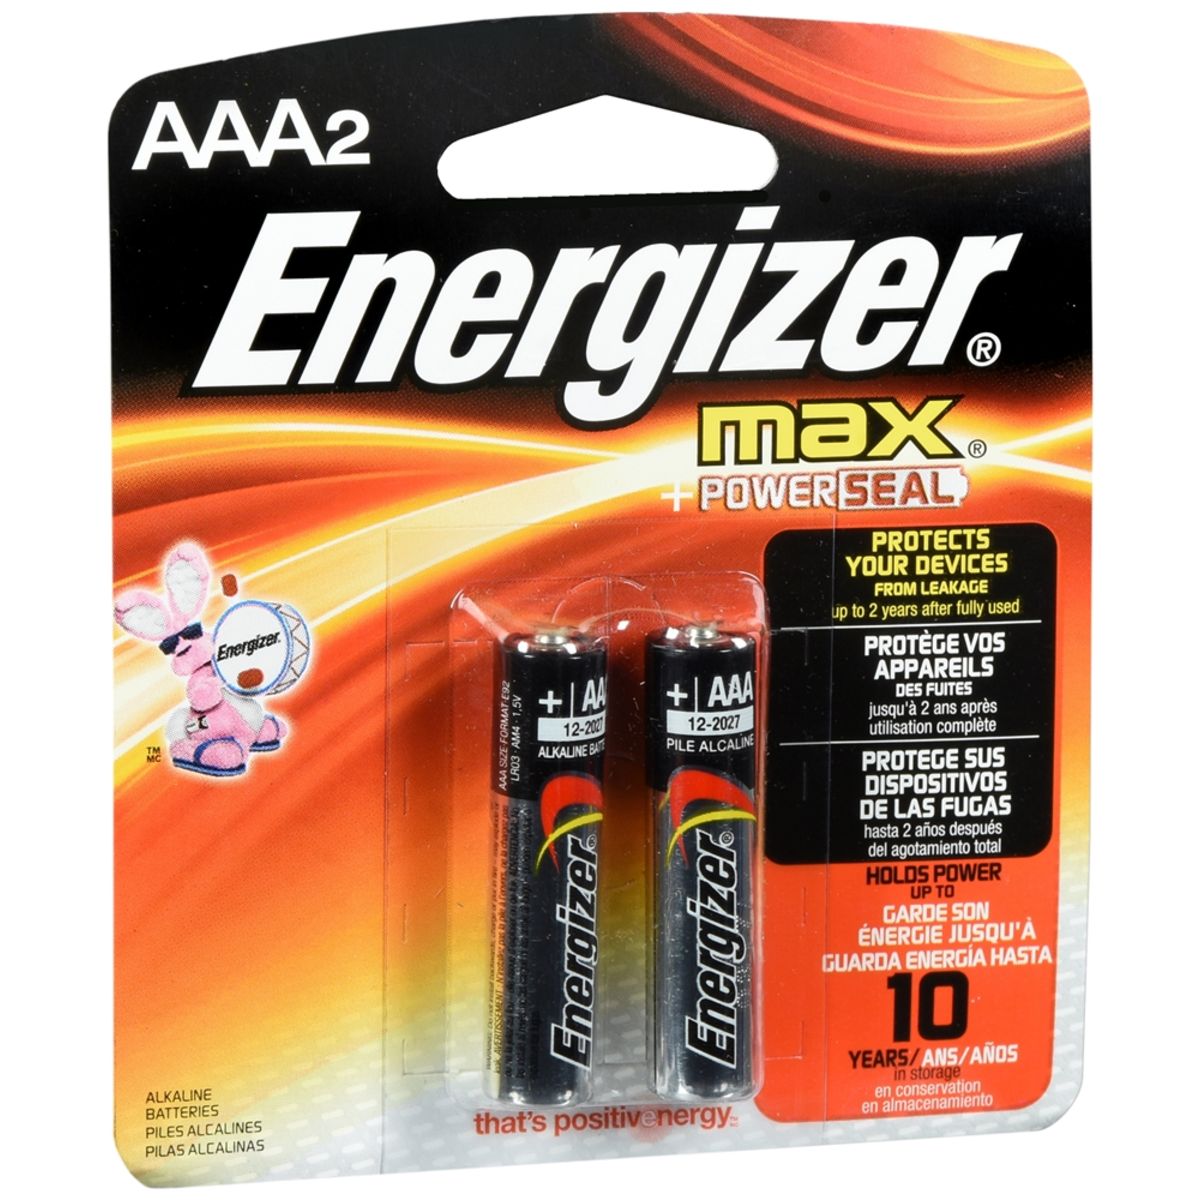 Energizer AAA2 Max+Powerseal Battery